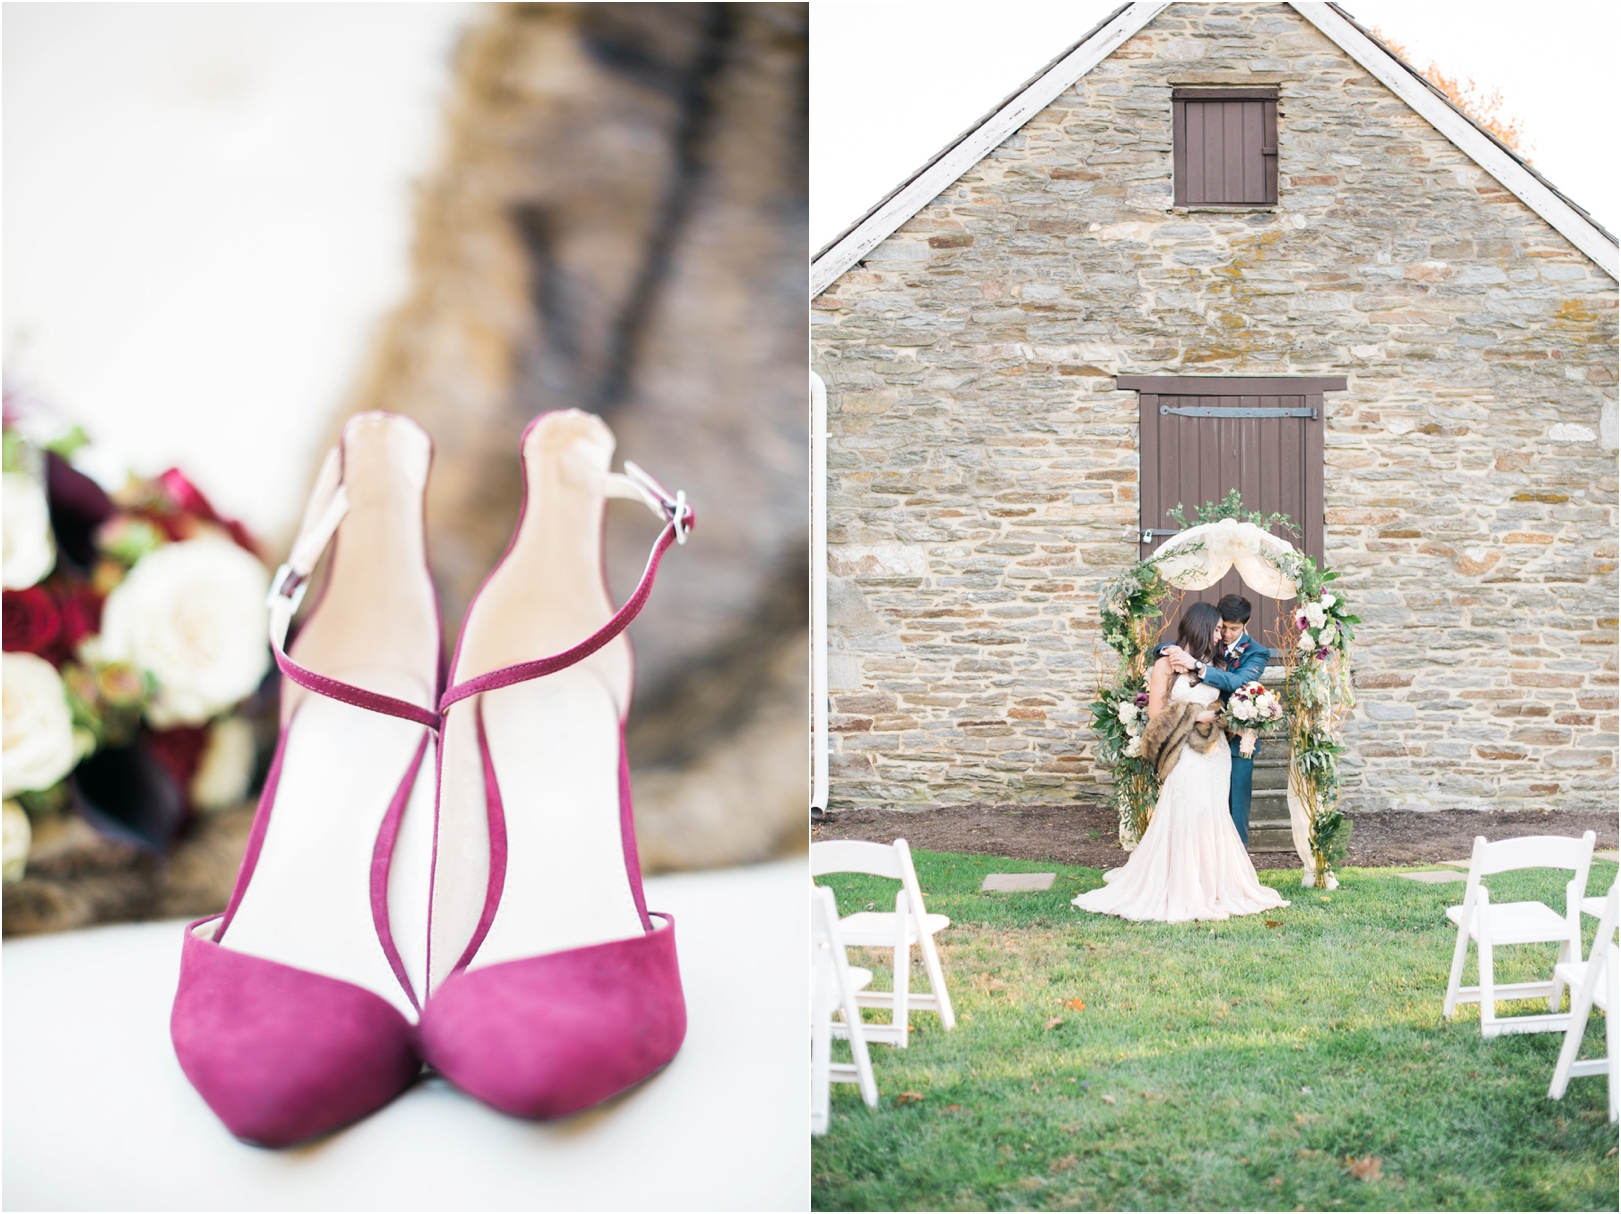 plum themed fall wedding colors inspiration shoot 